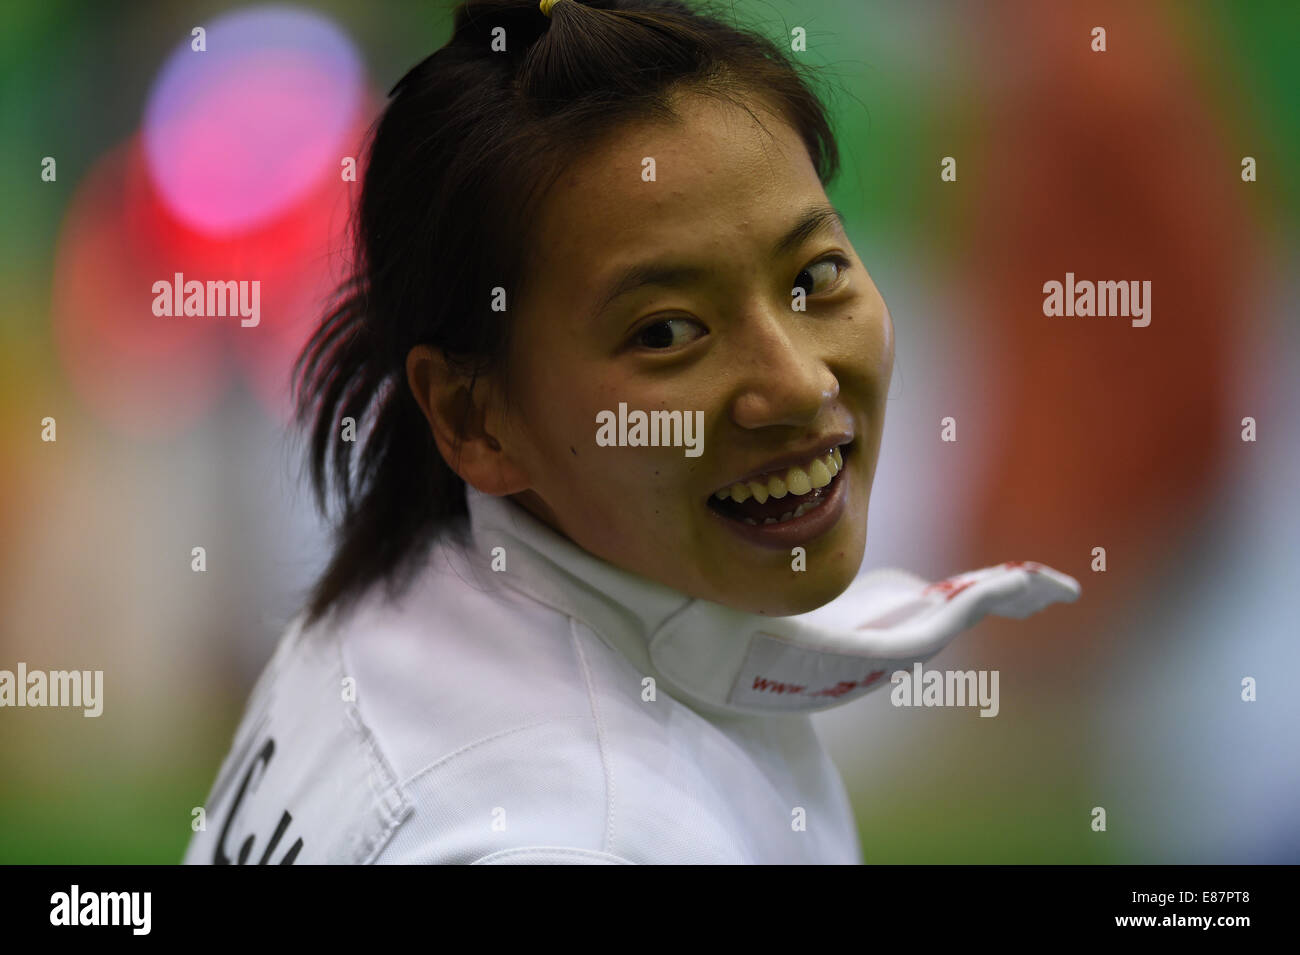 (141002) -- INCHEON, Oct. 2, 2014 (Xinhua) -- Wang Wei of China reacts during the women's individual fencing match of modern pentathlon at the 17th Asian Games in Incheon, South Korea, Oct. 2, 2014. (Xinhua/Xie Haining)(mcg) Stock Photo